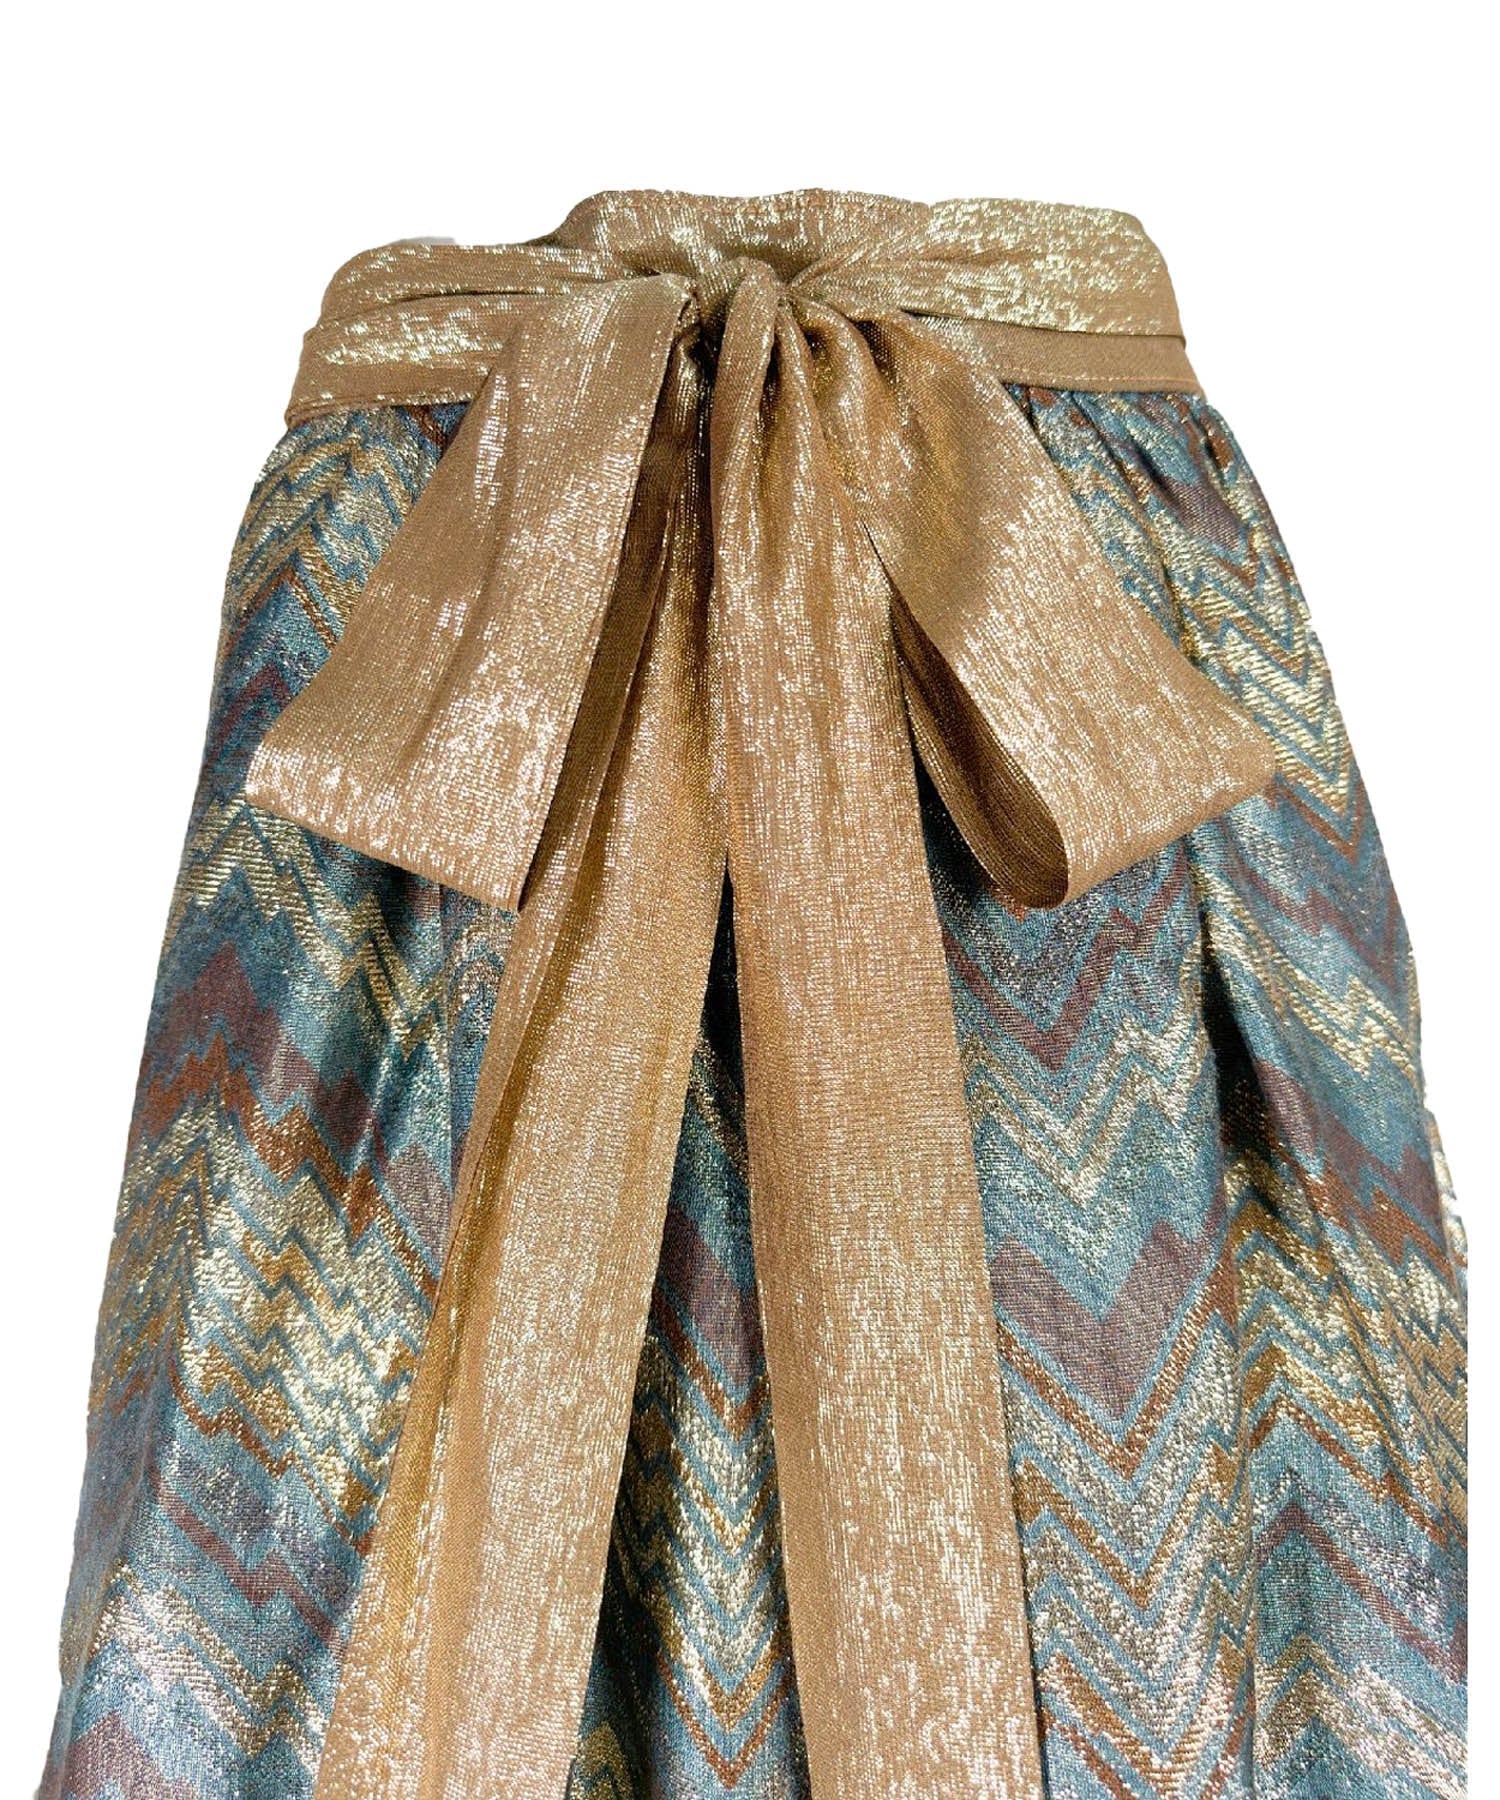 Adolfo Metallic Brocade Chevron Print Ball Skirt Saks Fifth Avenue 1970's